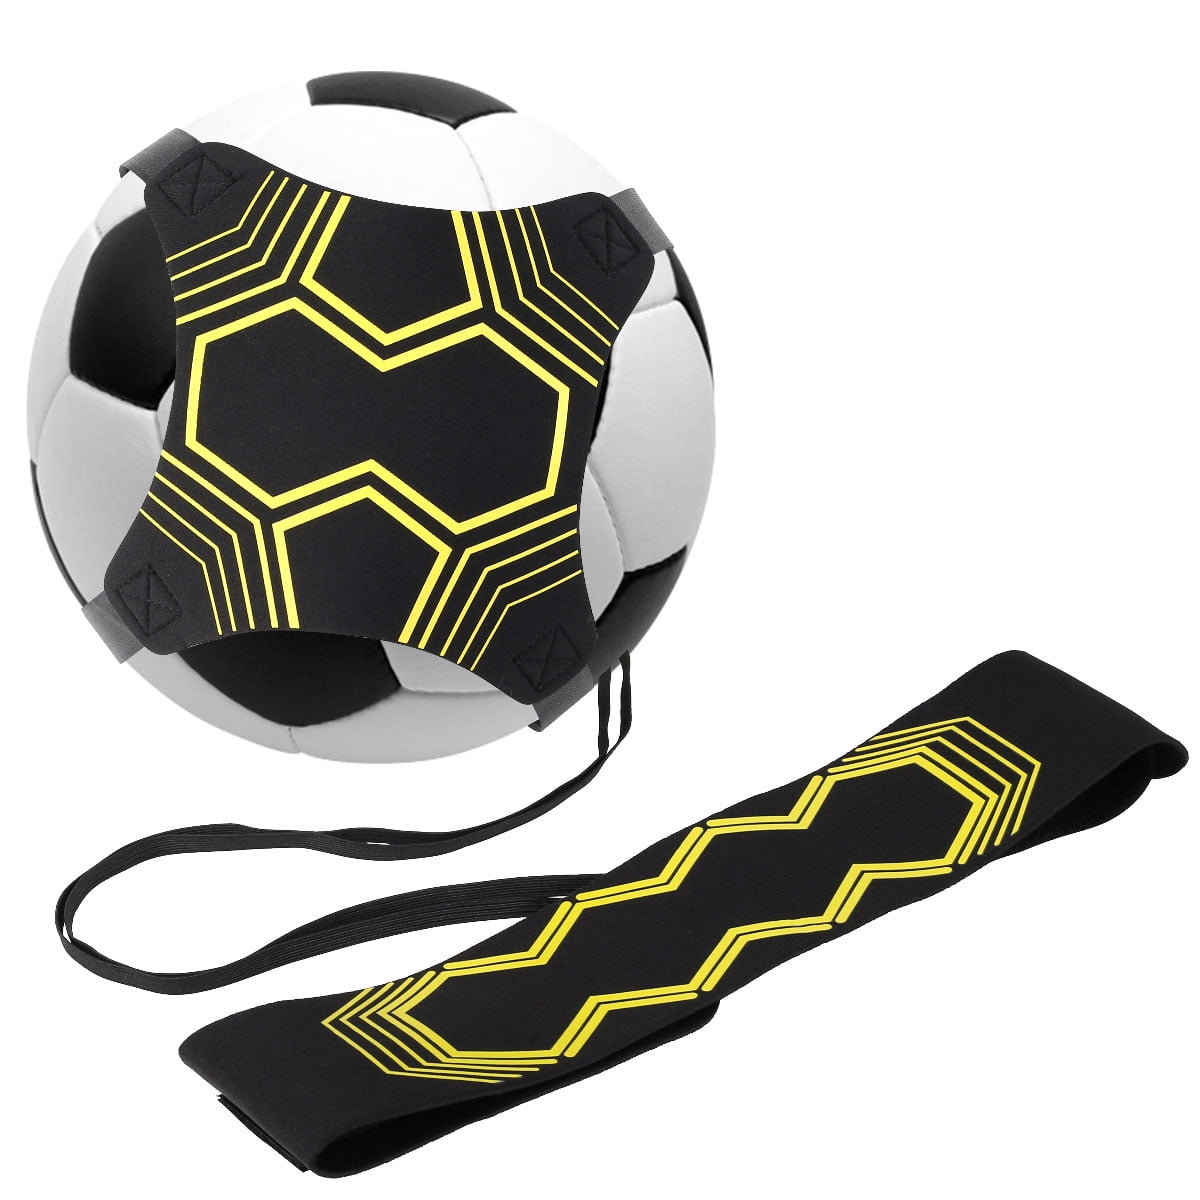 Adjustable Practice Football Kick Trainer Soccer Ball Train Aid Equipment Belt 